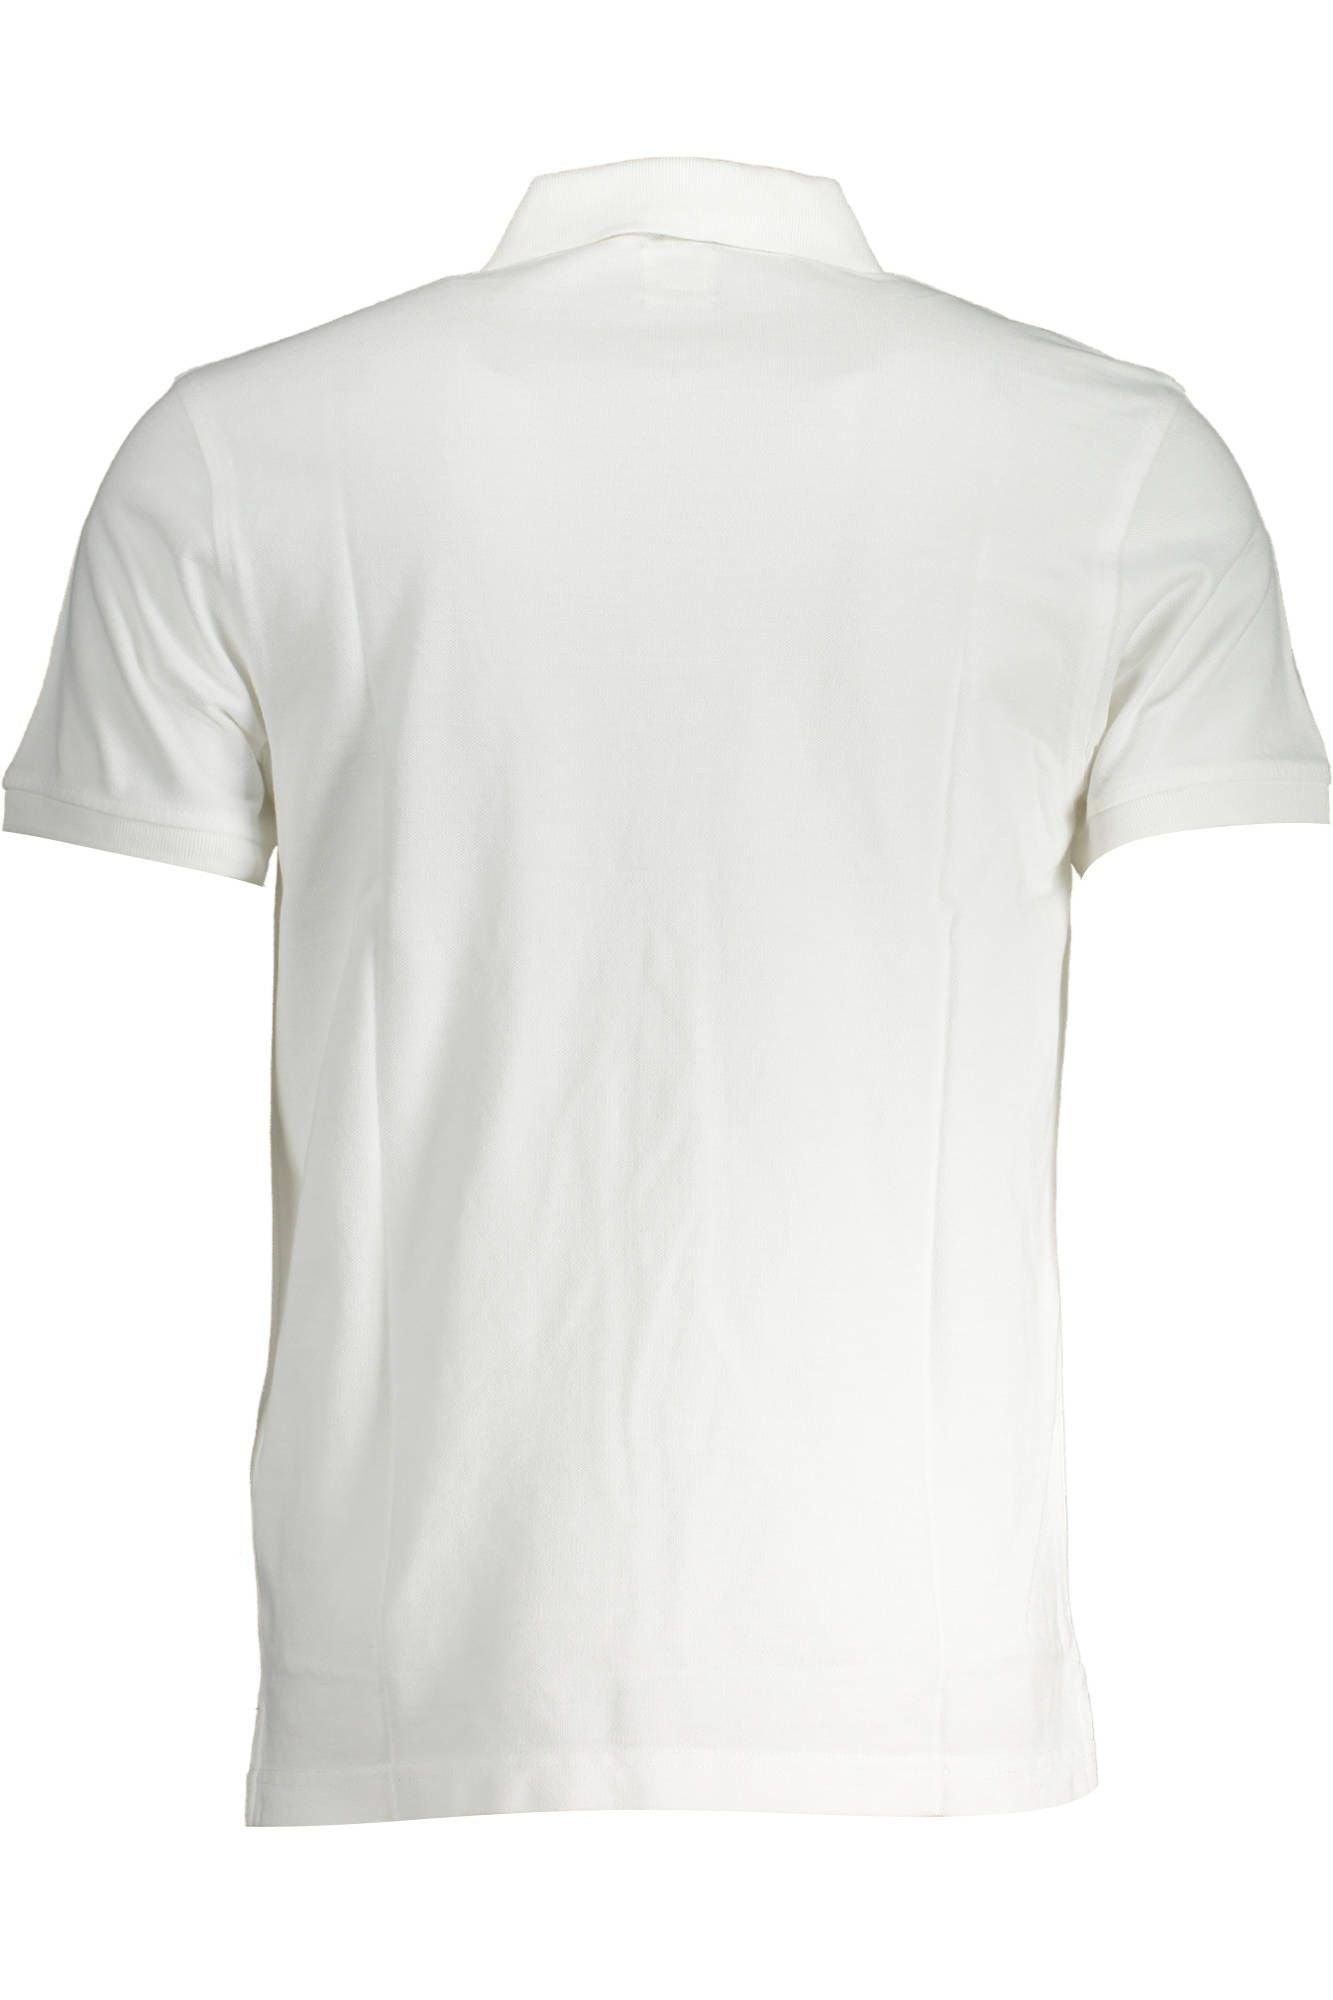 Levi's Classic White Cotton Polo Shirt - PER.FASHION